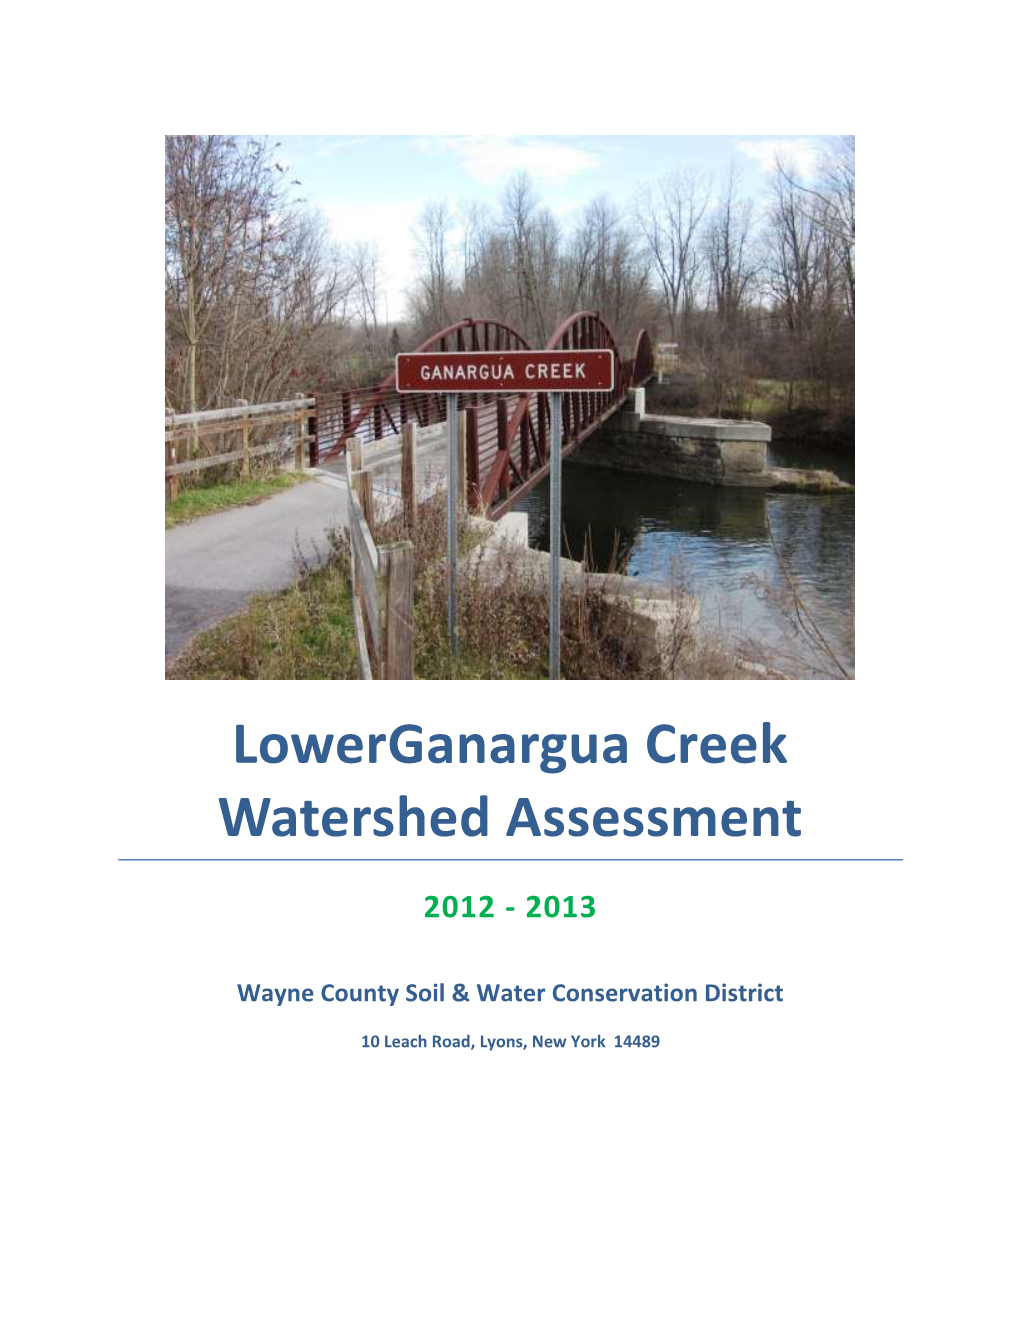 Lower Ganargua Creek Watershed Assessment